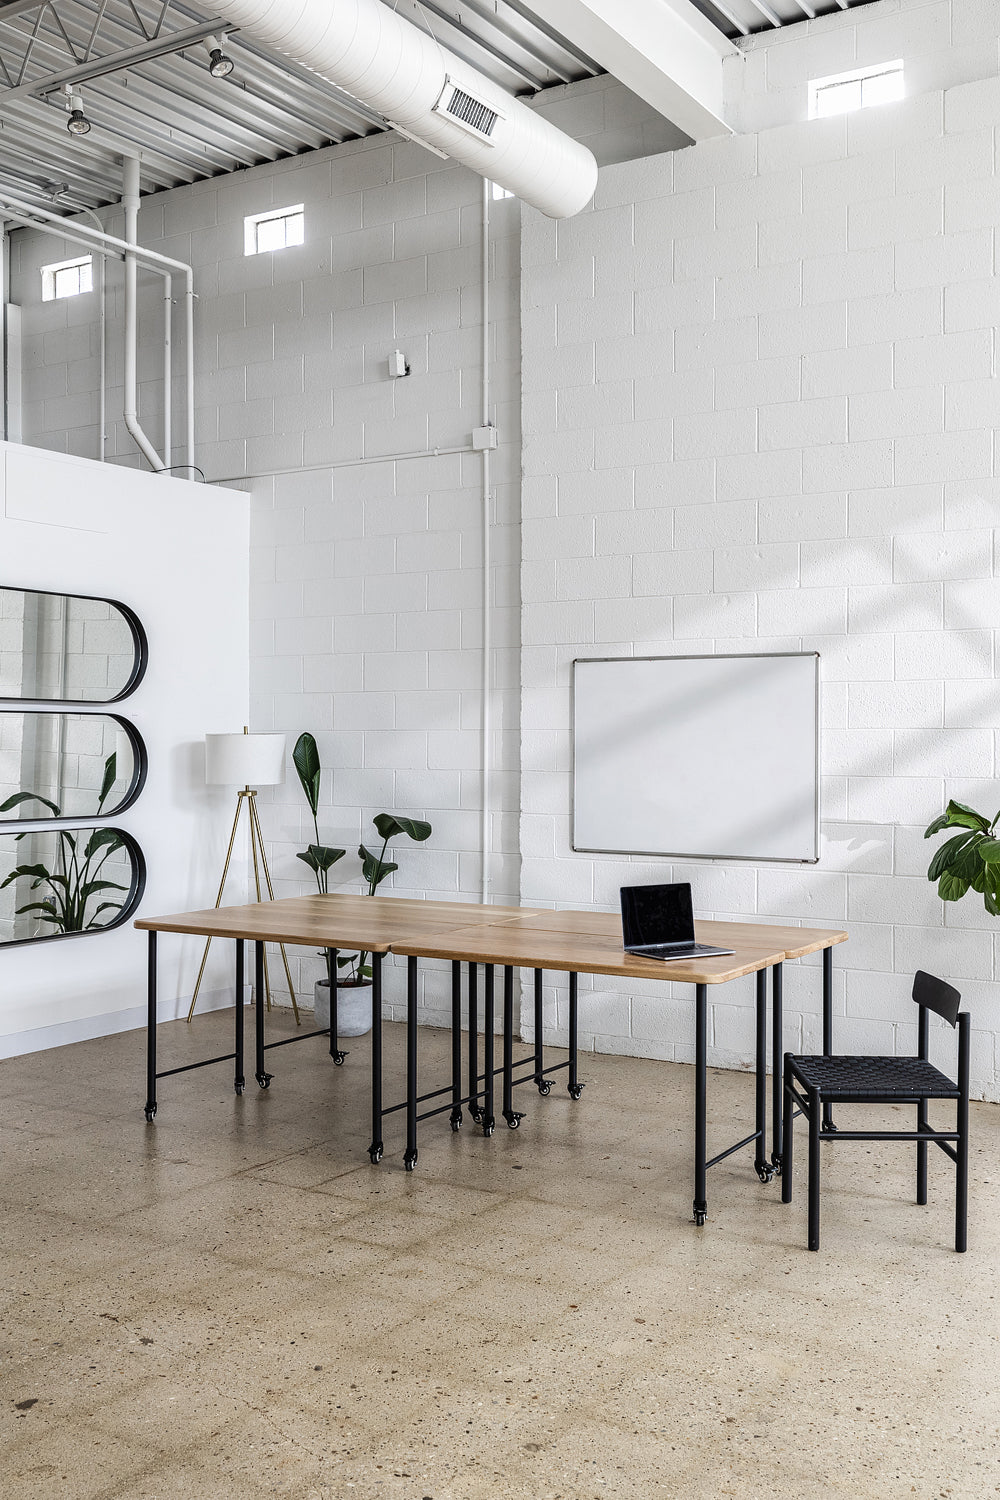 Modular office furniture by Edgework Creative